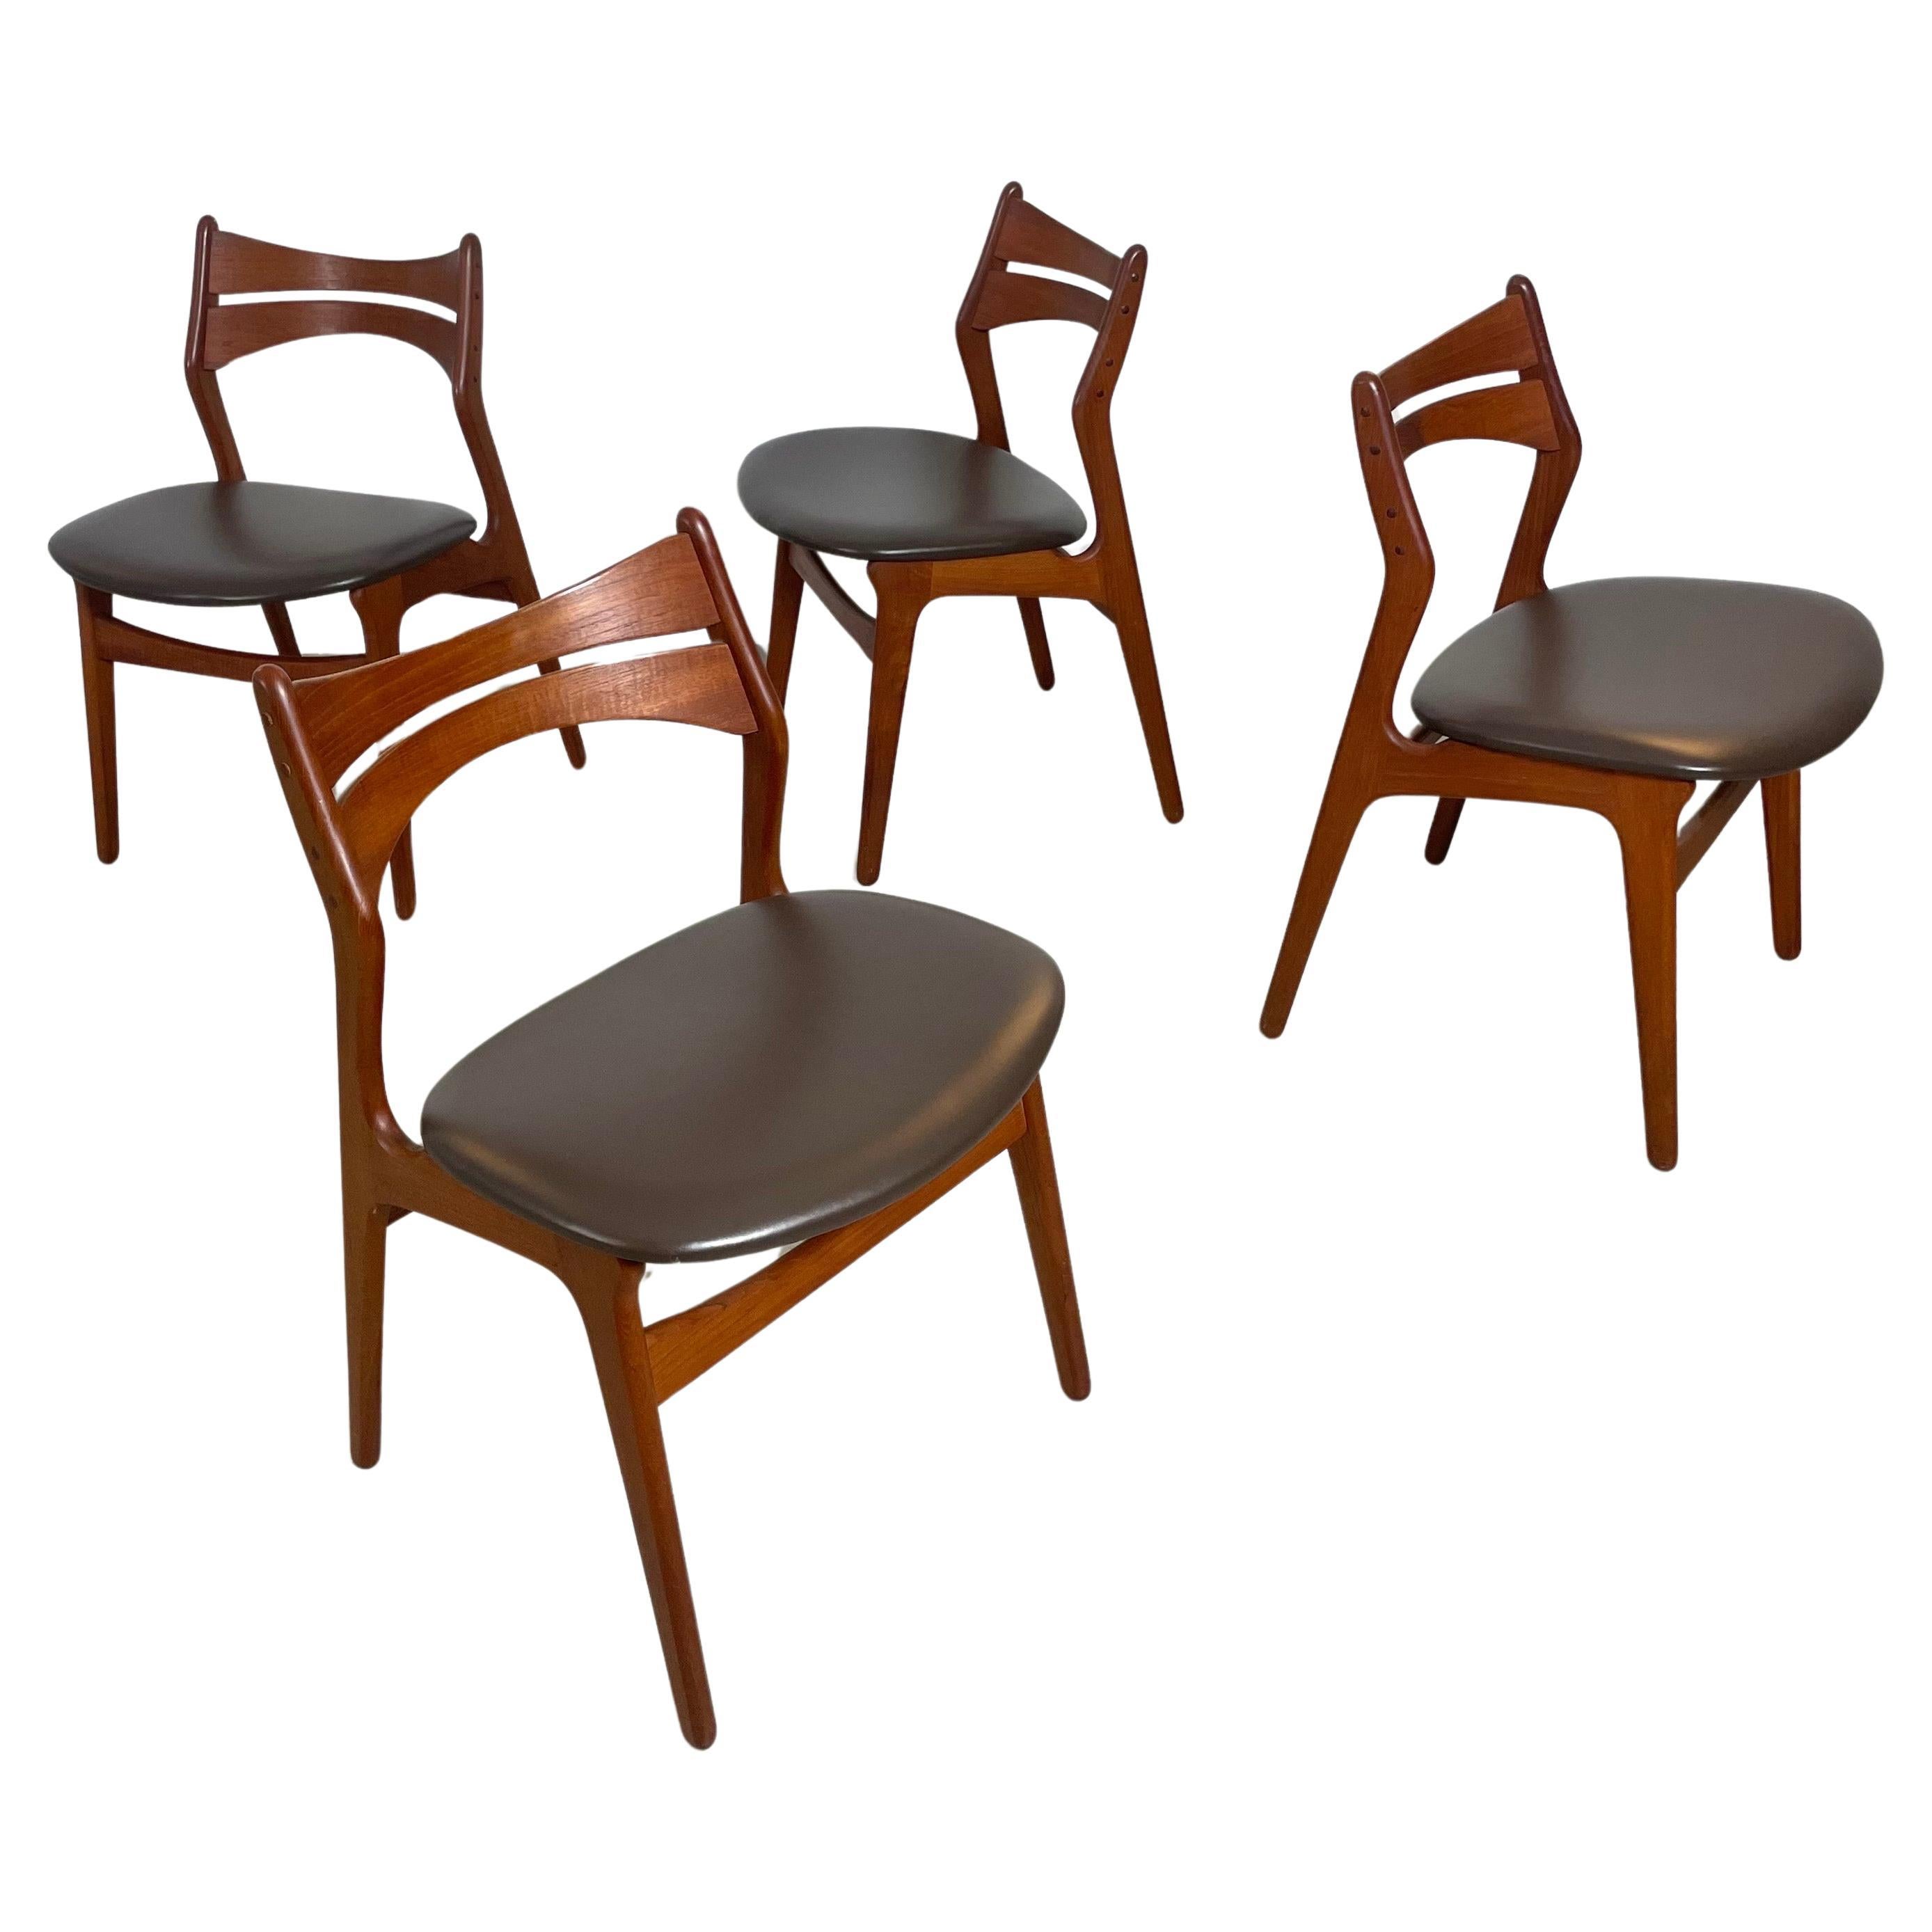 Skandinavian Teak Dining Chairs by Erik Buch, Denmark 1950s For Sale